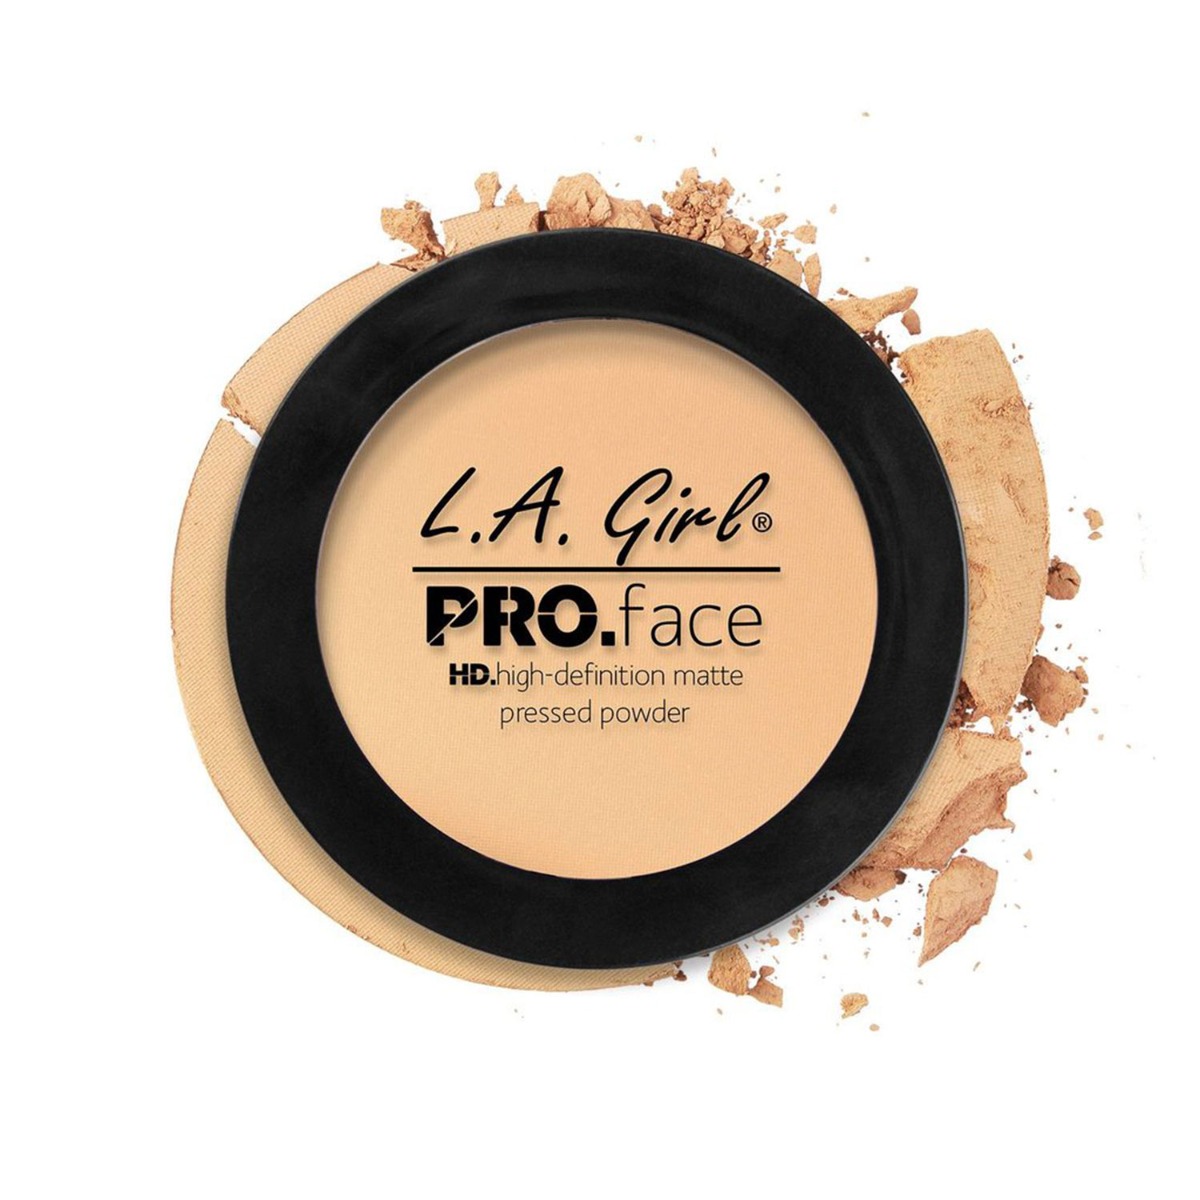 L.A. Girl HD Pro Face Pressed Powder, 7gm